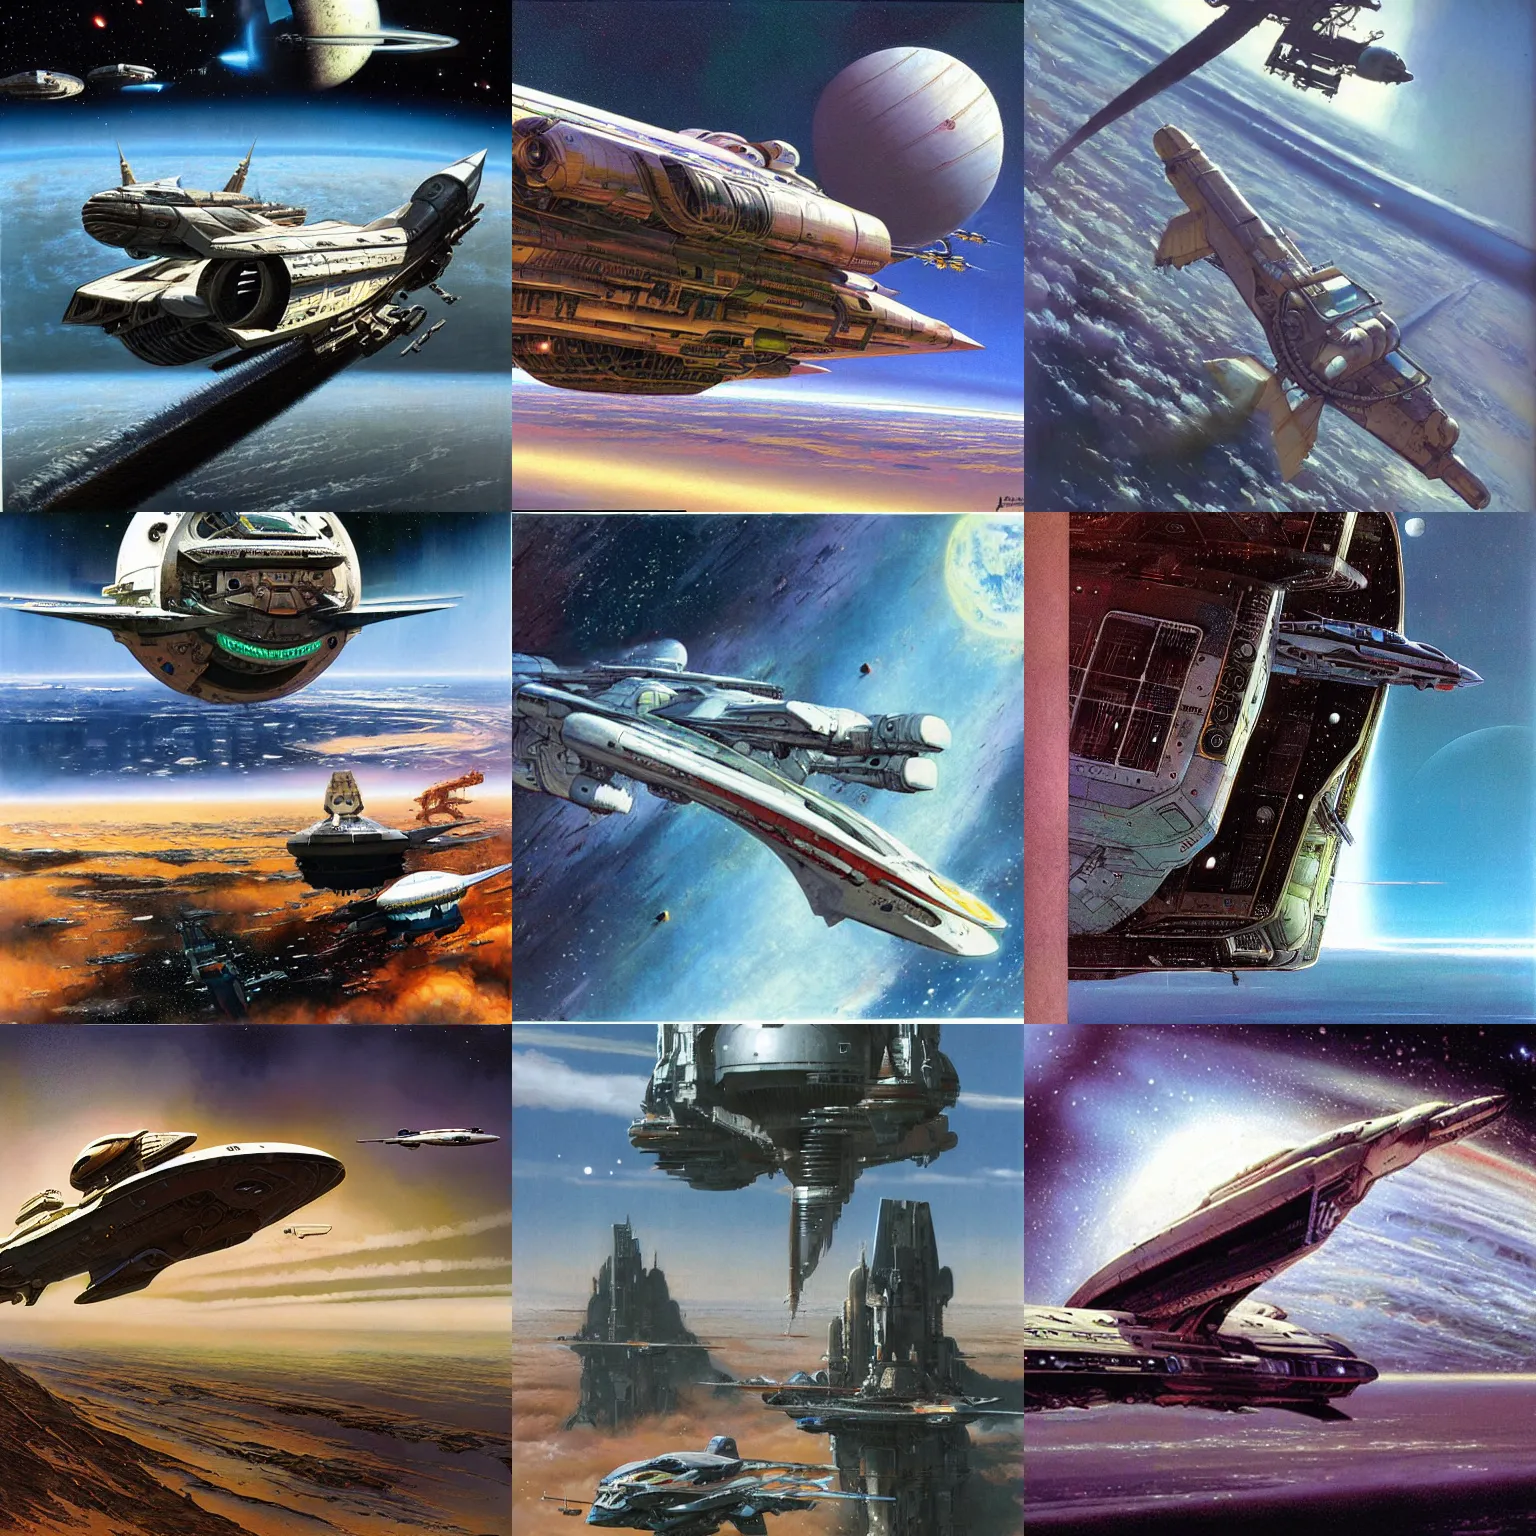 Prompt: realistic illustration scout spaceship exploration survey sci-fi peter elson, john berkey